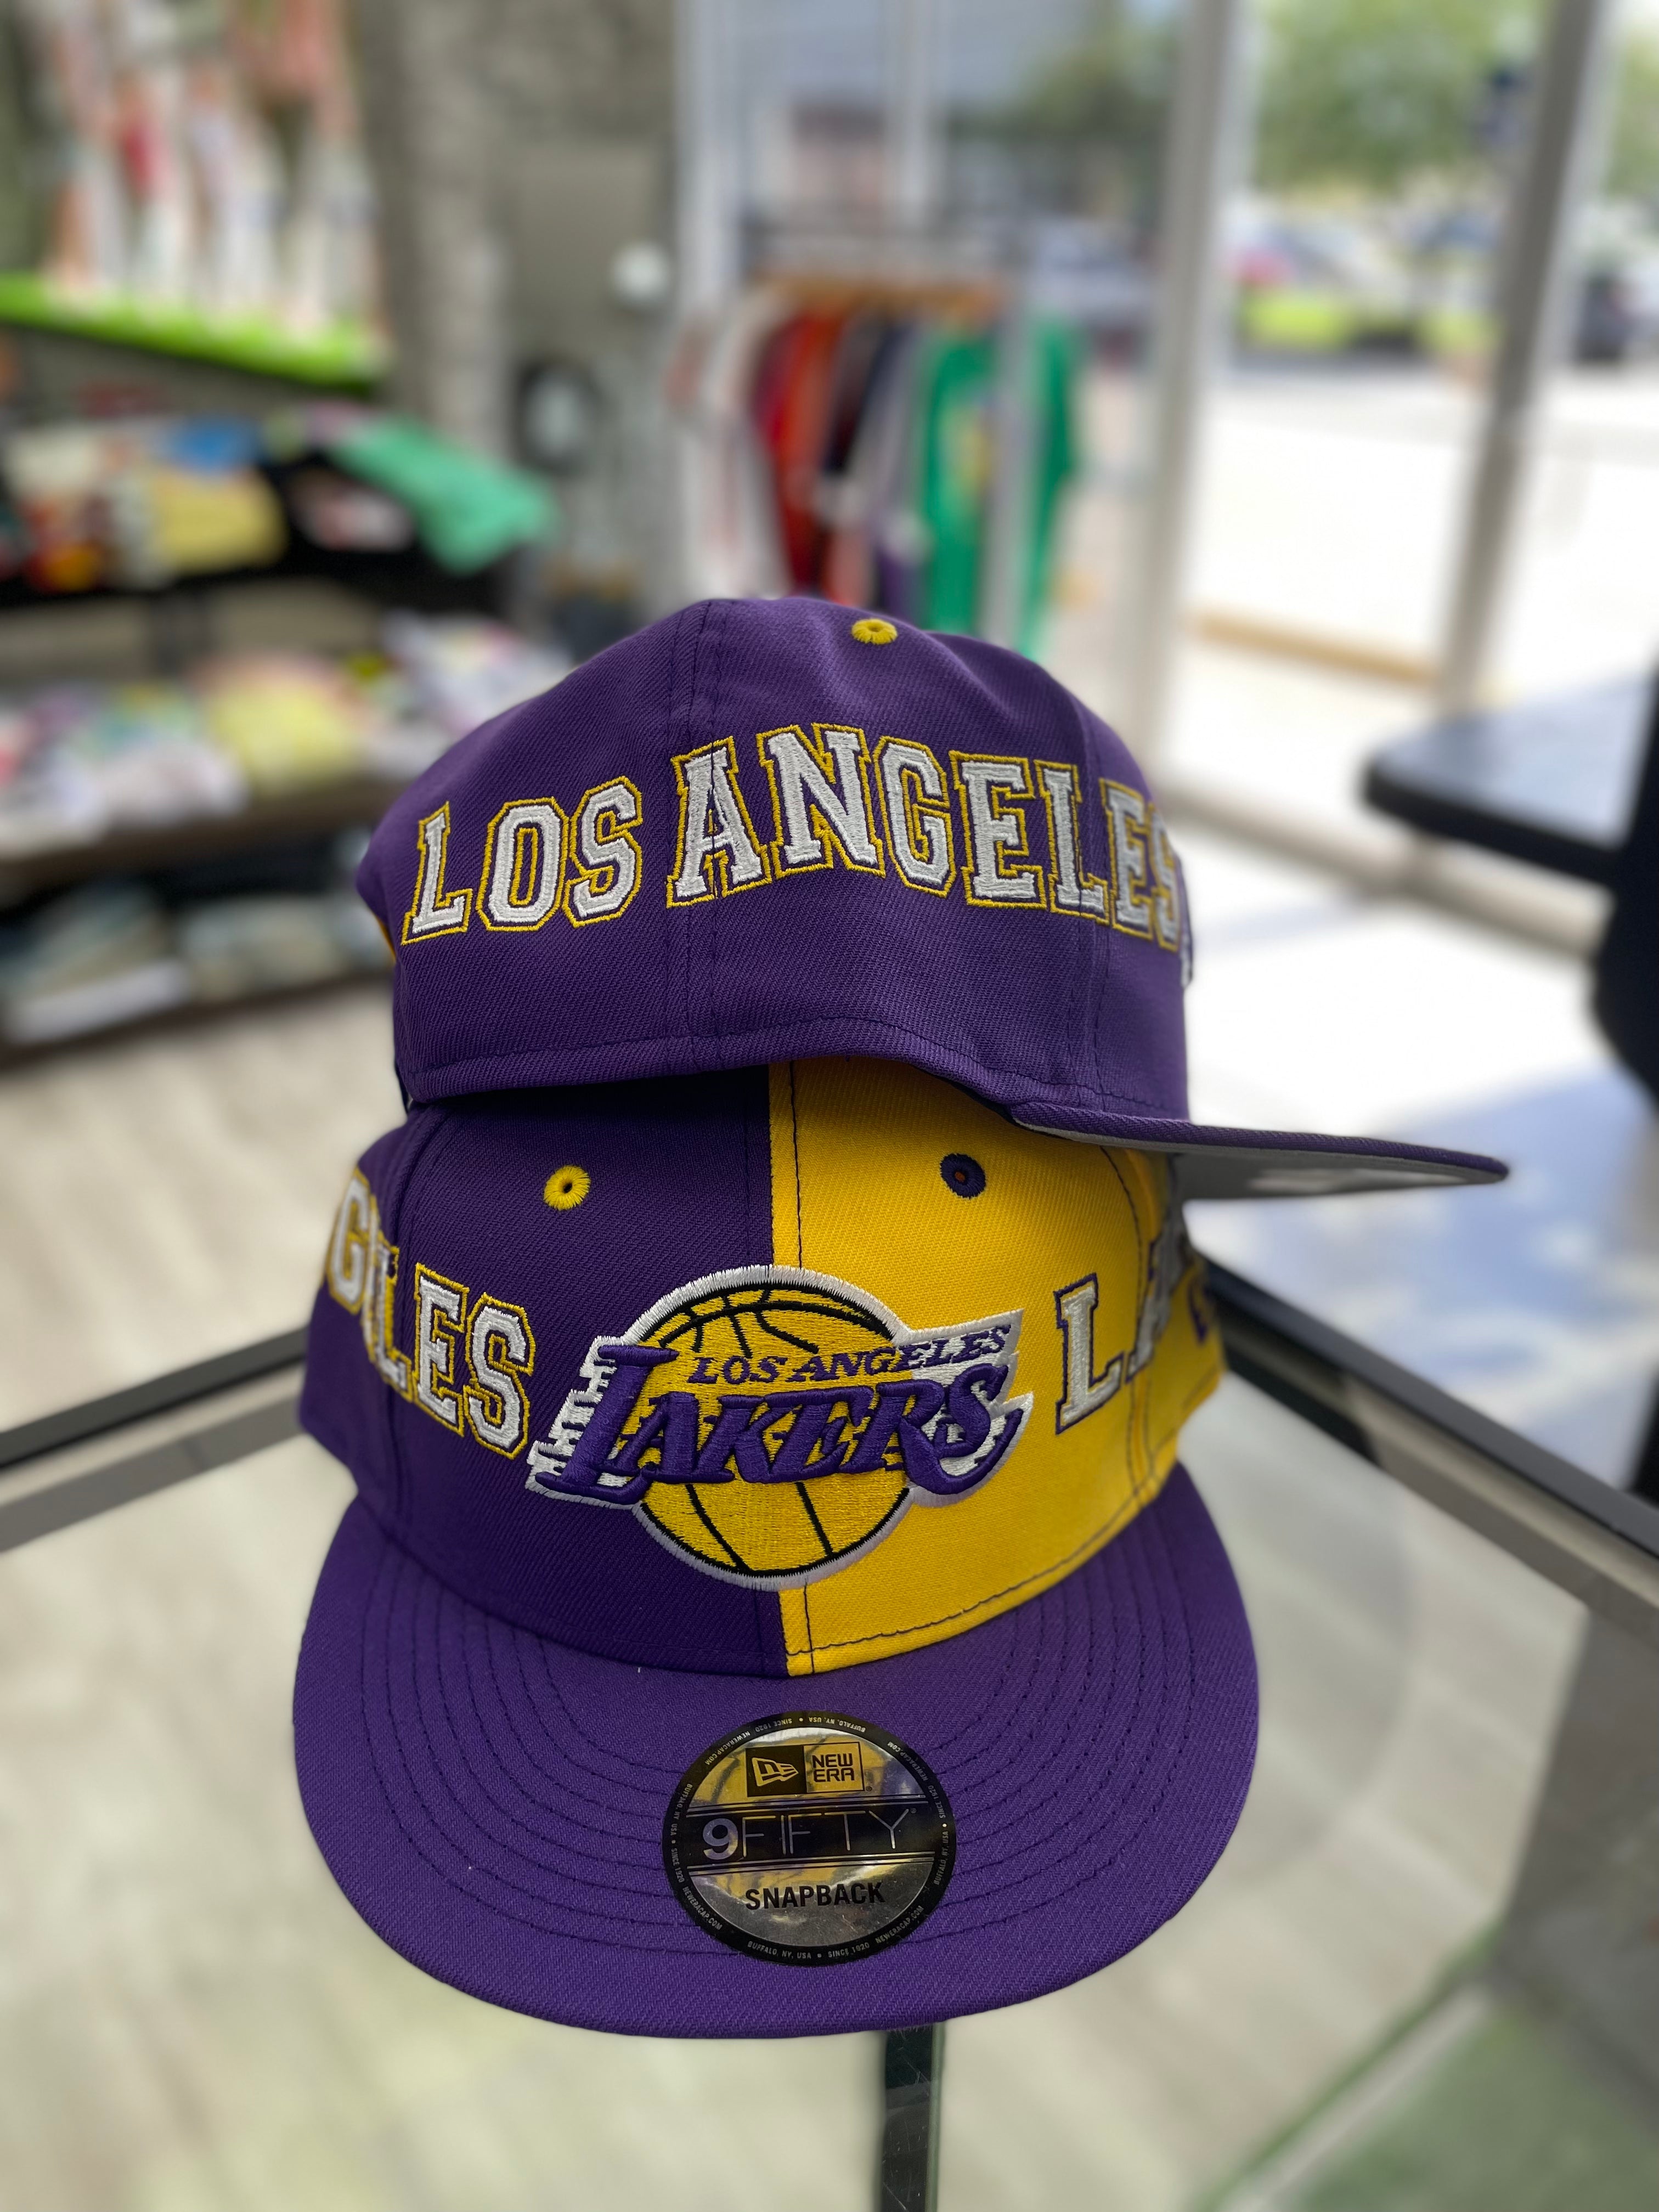 New Era, Accessories, Lakers Championship Hat 220